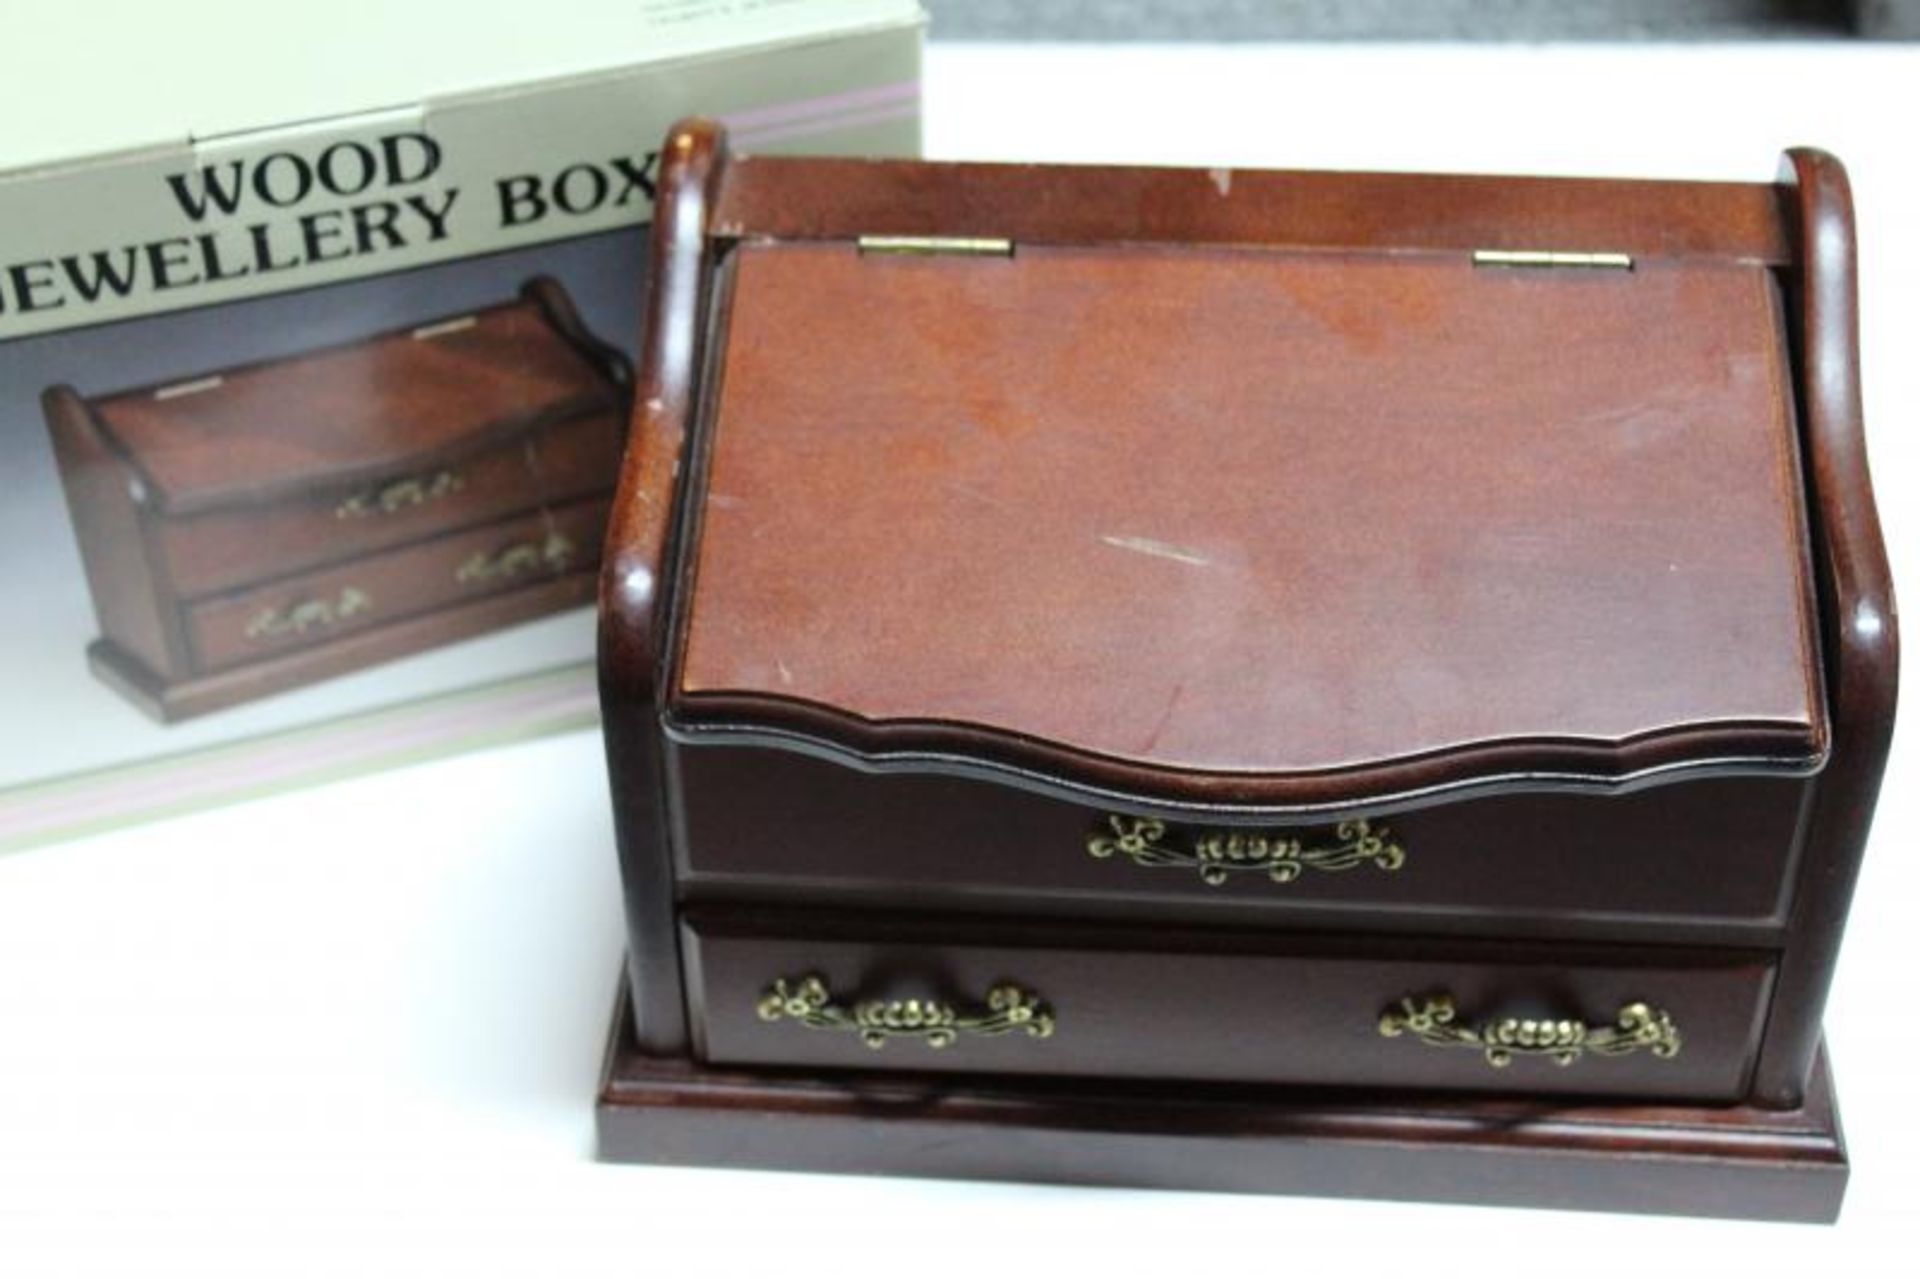 Wooden jewellery box, new in box